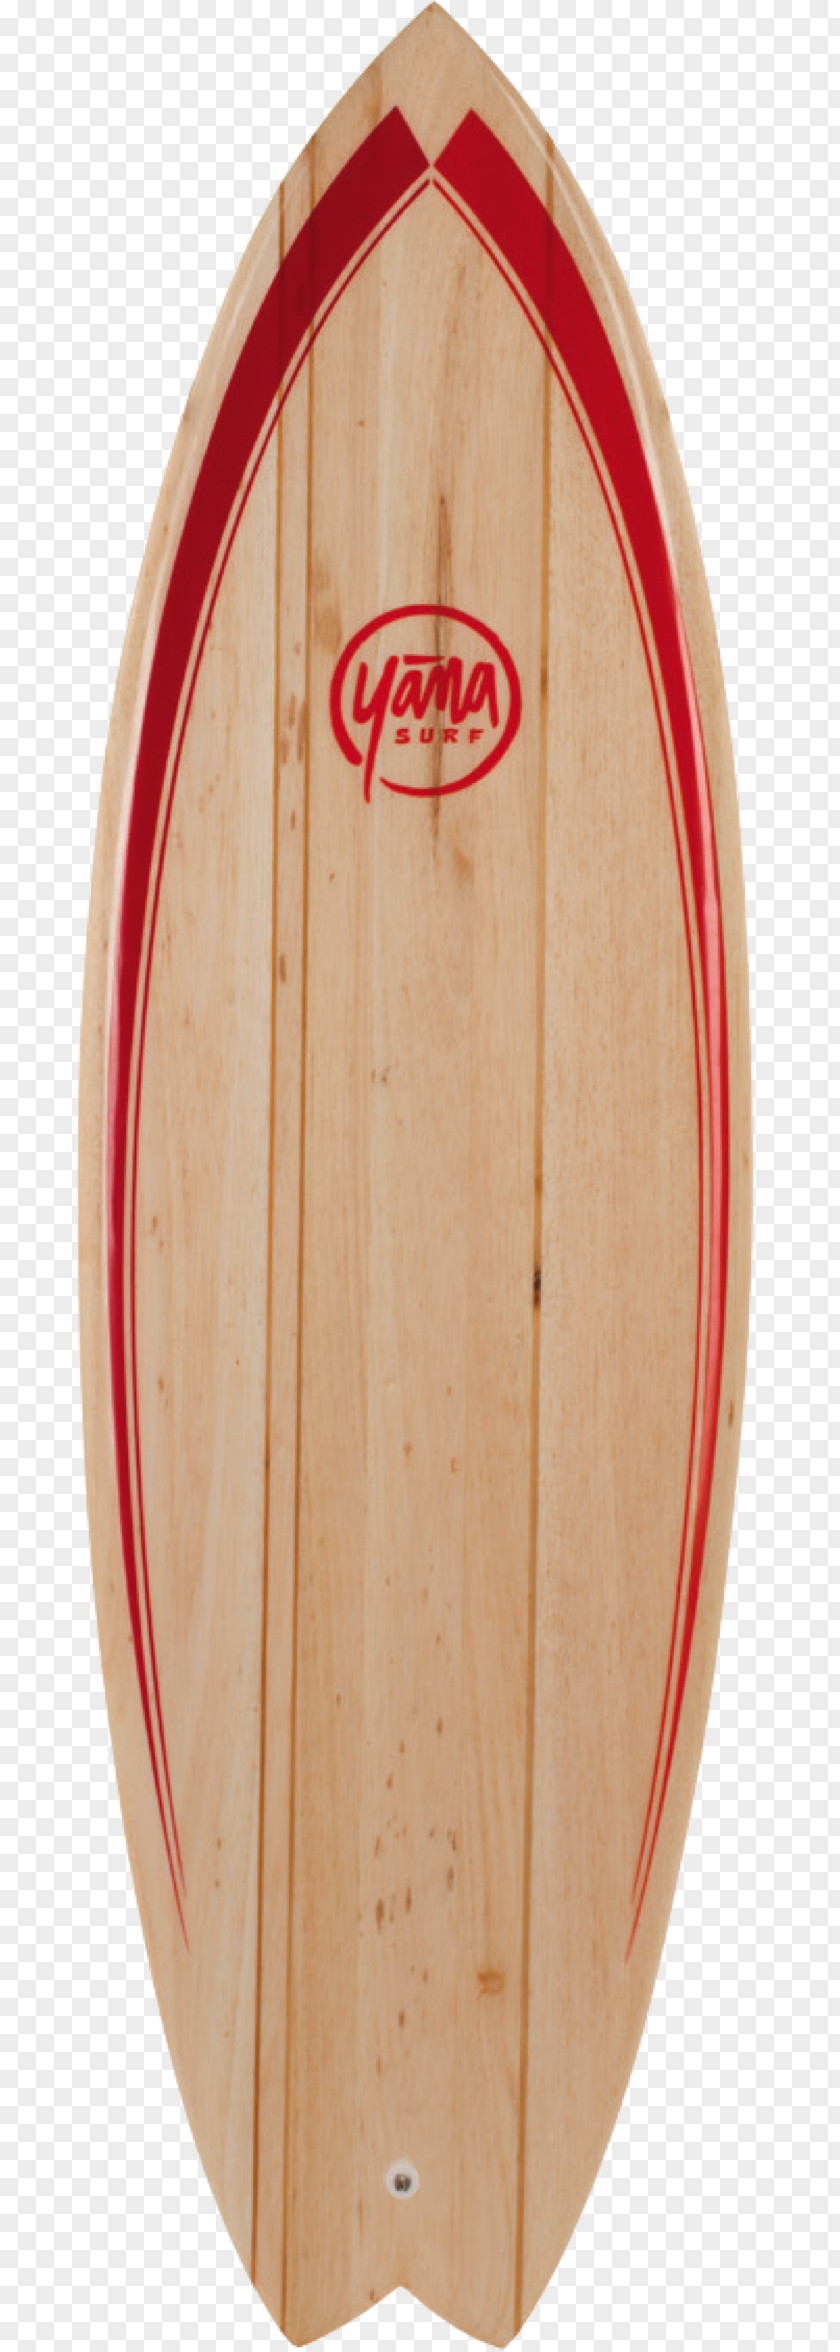 Surfing World Surf League Surfboard Clip Art PNG